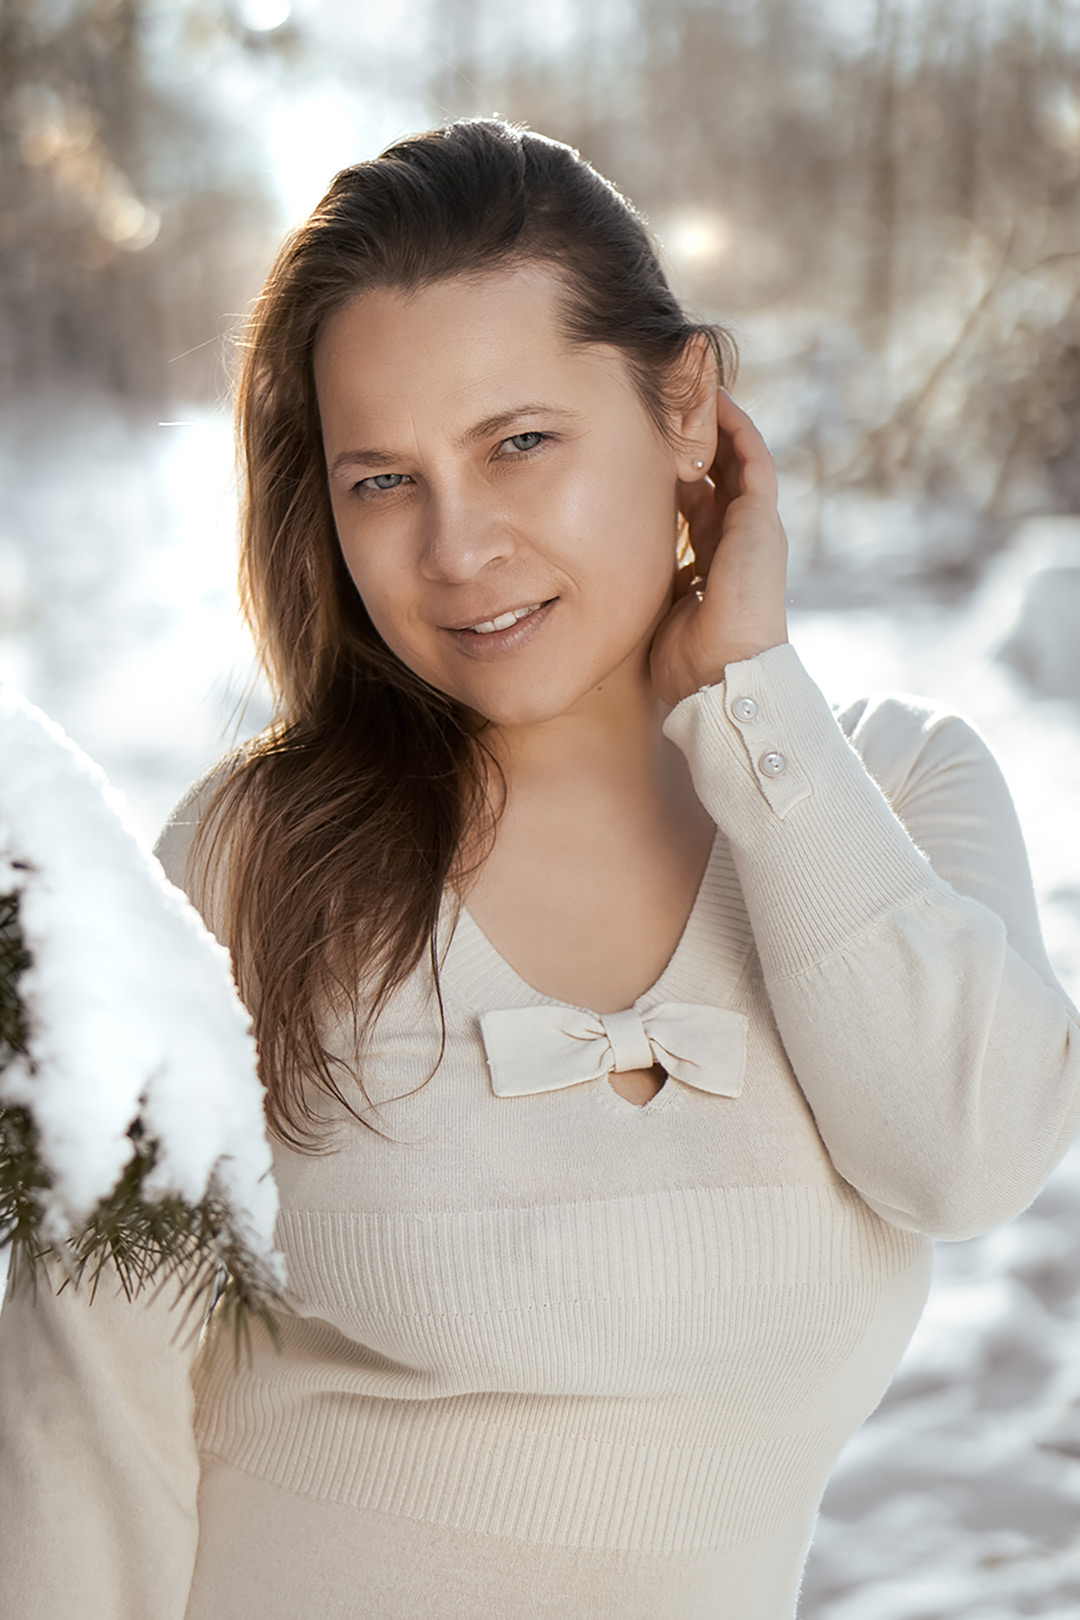 winter fotoshooting Frau in Weißen Kleid im Schnee